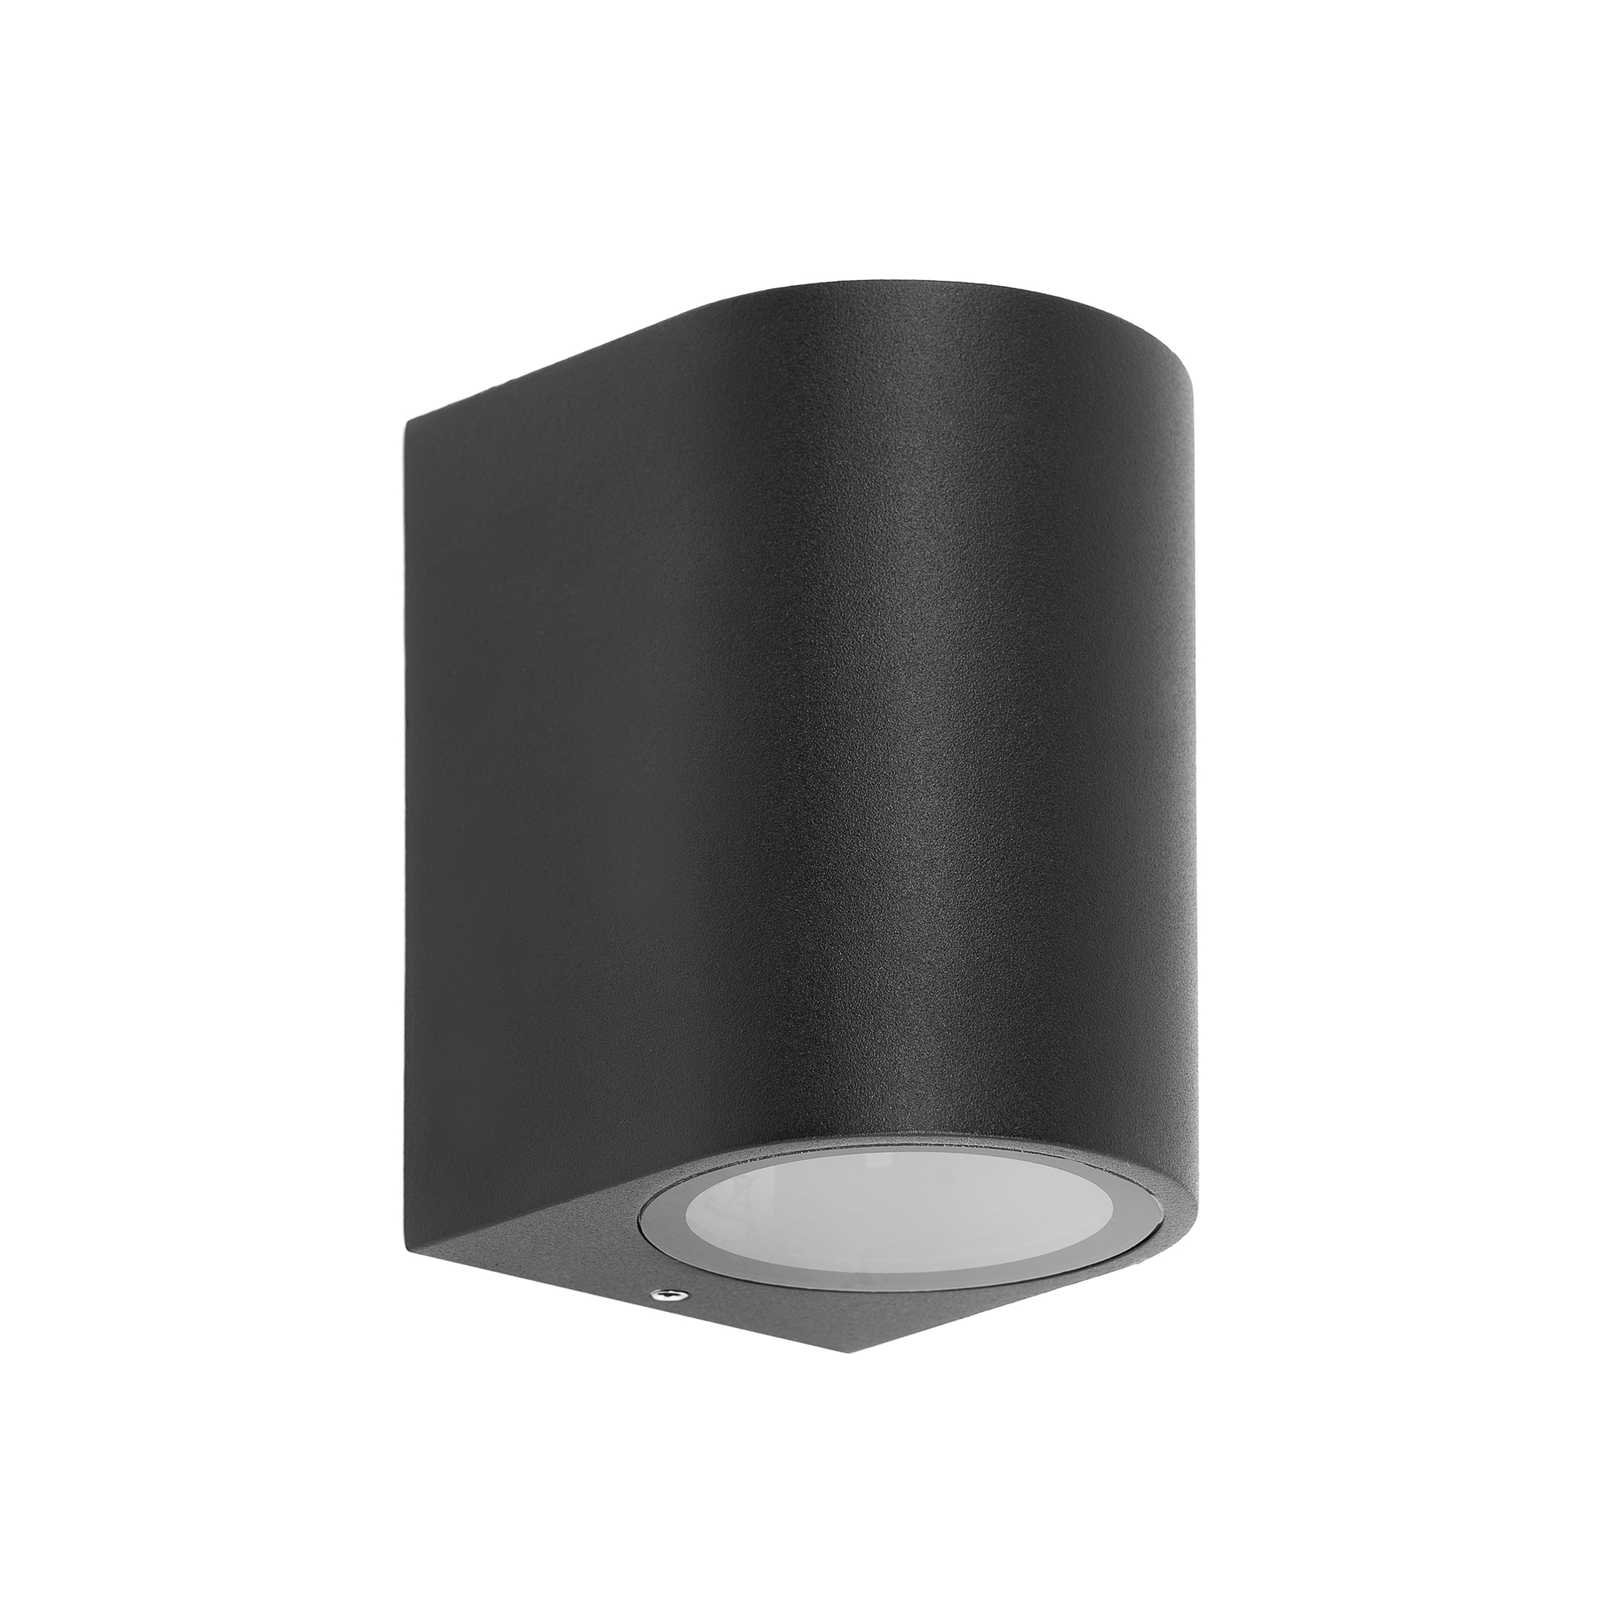 Prios outdoor wall light Tetje, black, round, 10 cm, set of 4